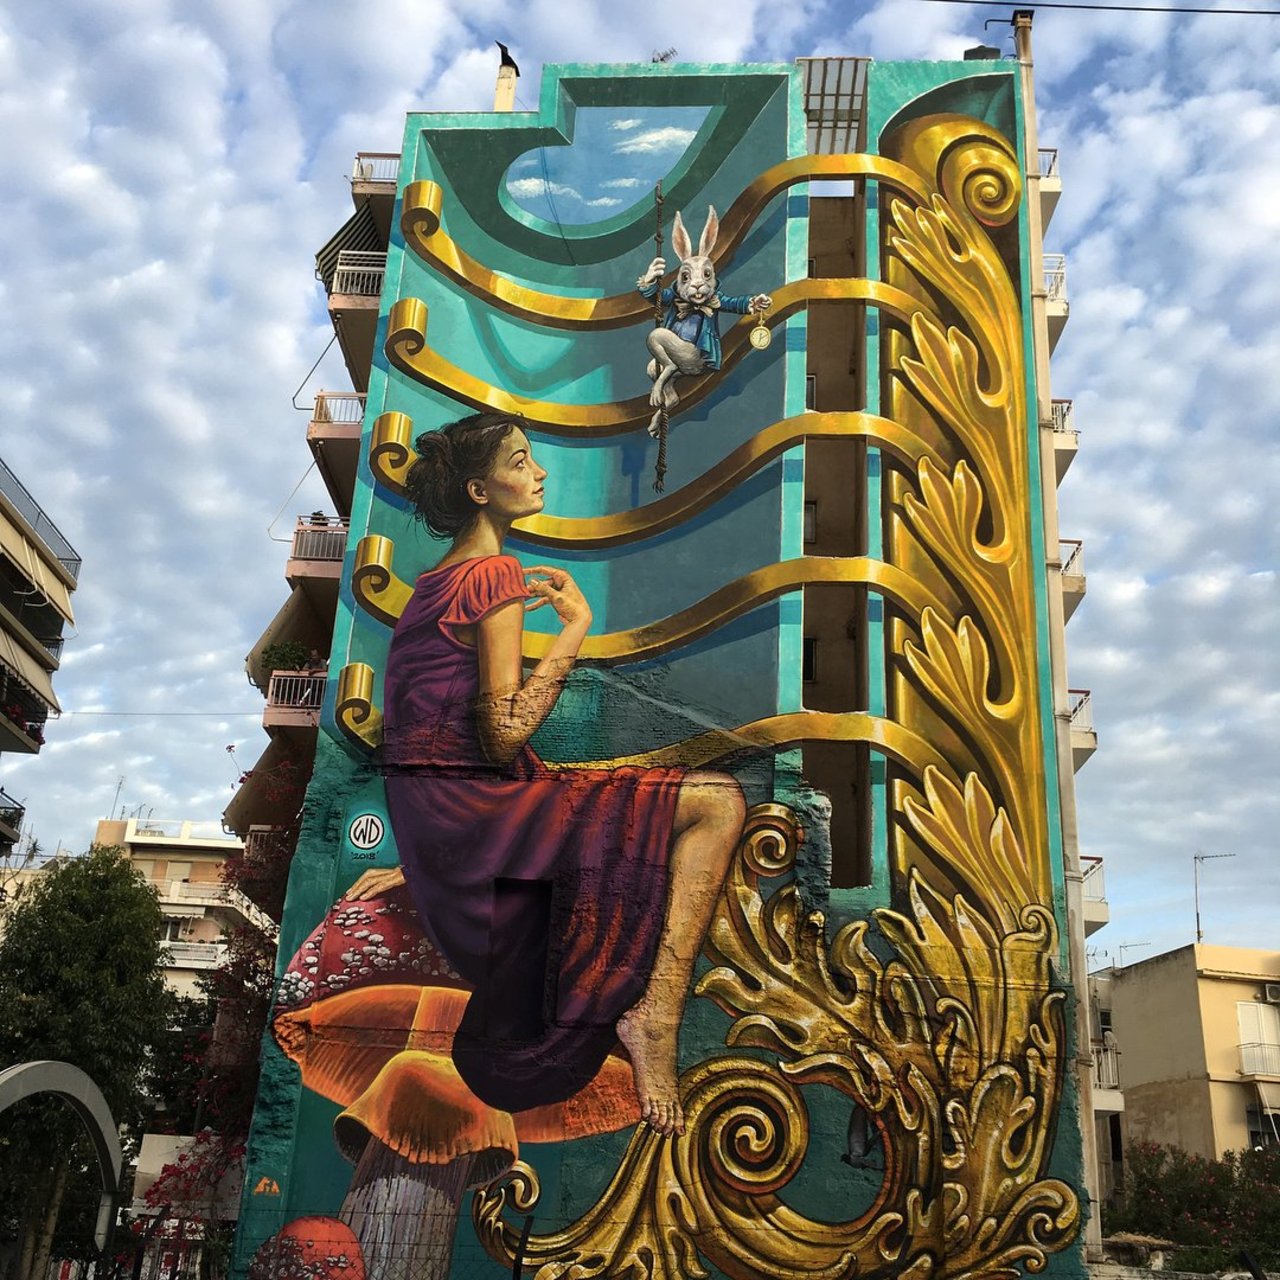 Time Hole, Patras Greece 2018  Mural Art by wd_wilddrawing . . . #art #artist #streetart #muralart #graffiti #urbanart #wd_wilddrawing #wdstreetart #mural #aliceinwonderland #Patra #Greece #artistsnartlovers https://t.co/mOv6uhhl56